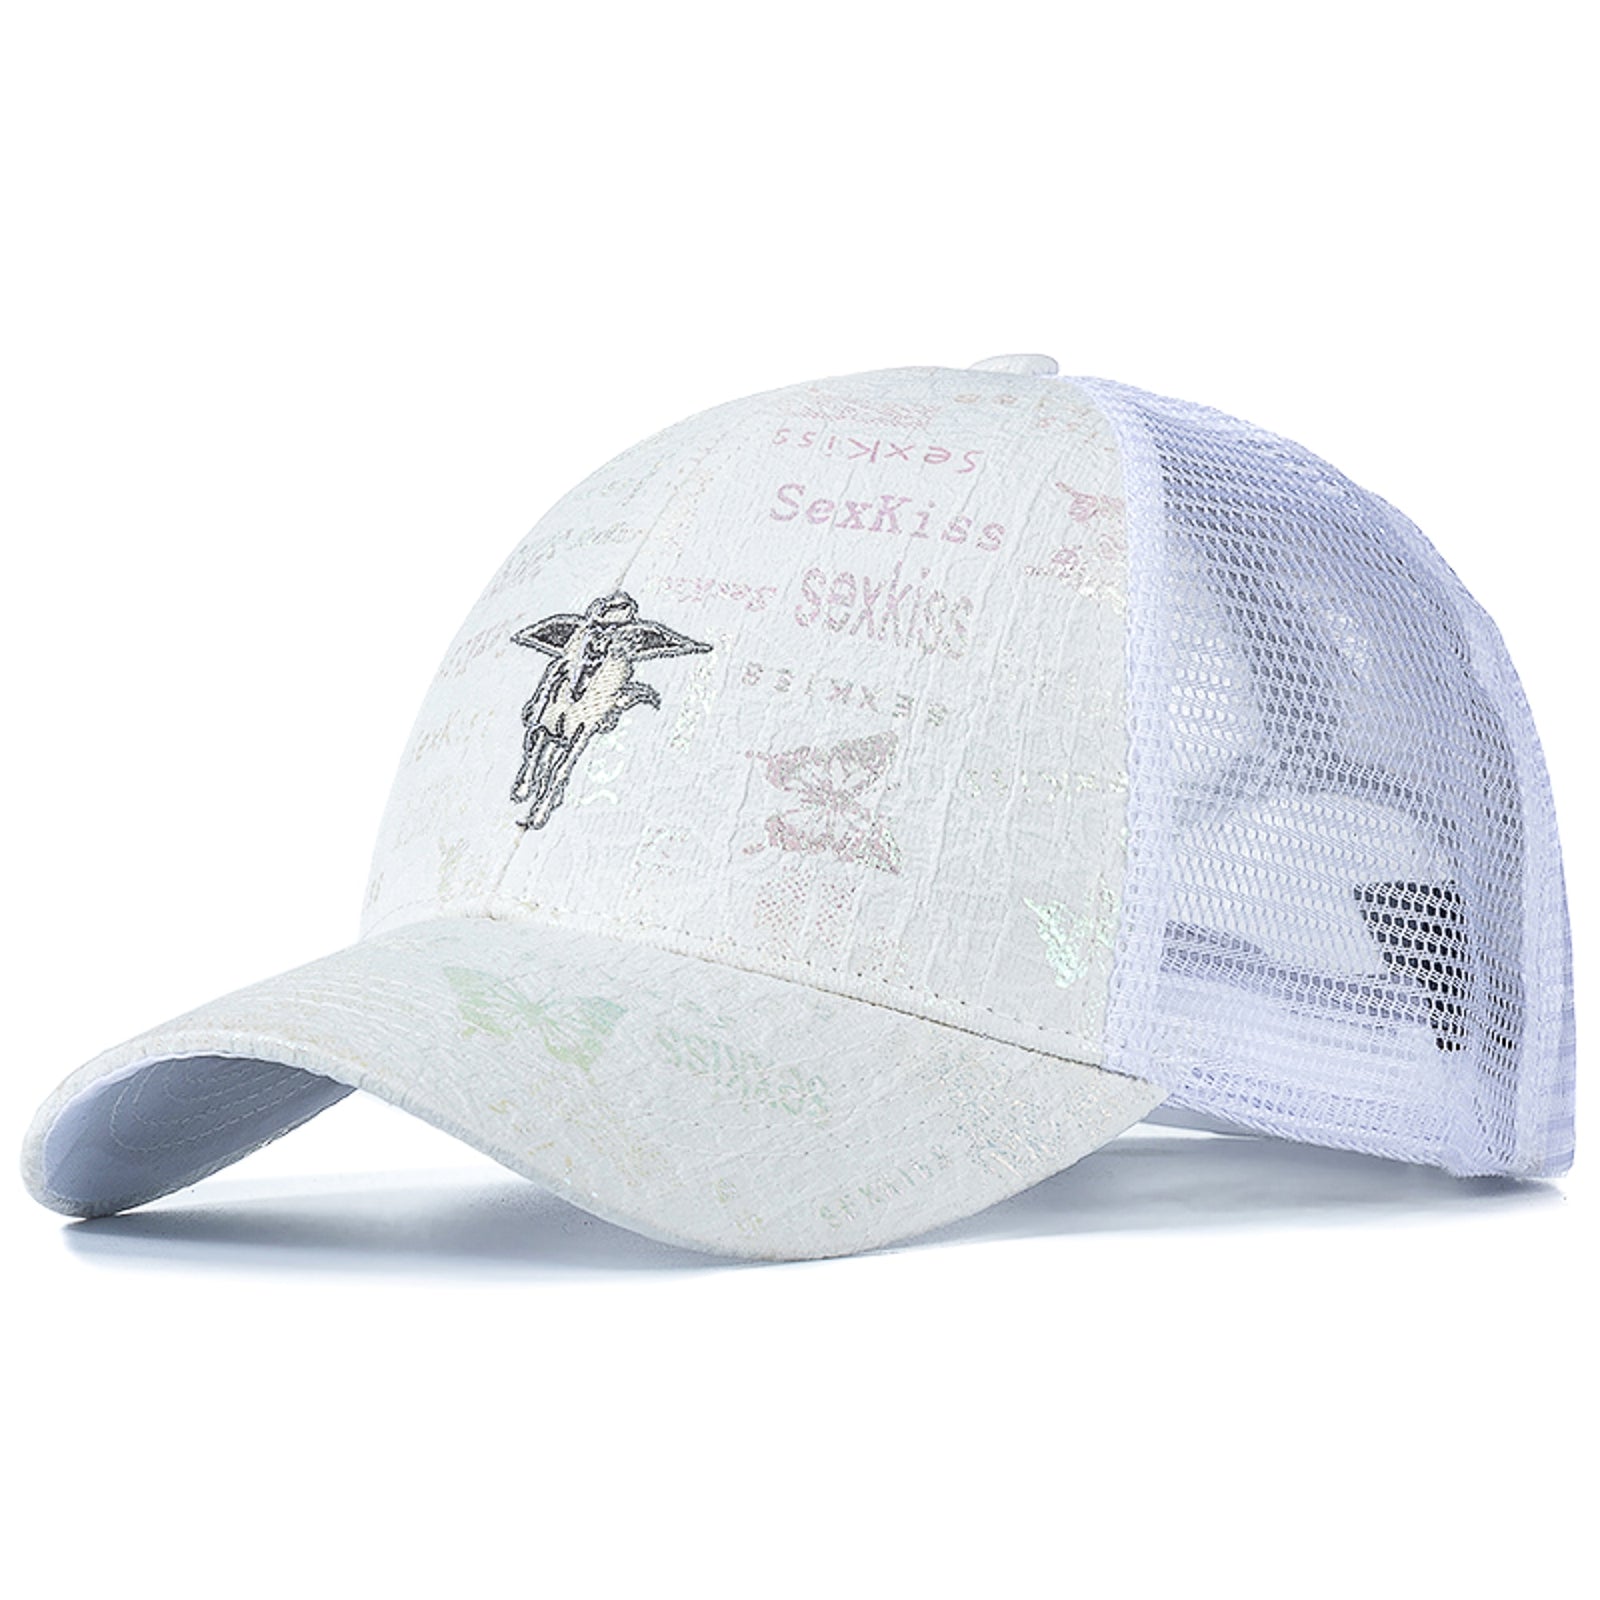 Stylish Women's Cap Summer Trucker Hats For Women Fashion Flying Horse Embroidery Baseball Cap Outdoor Streetwear Hat Cap